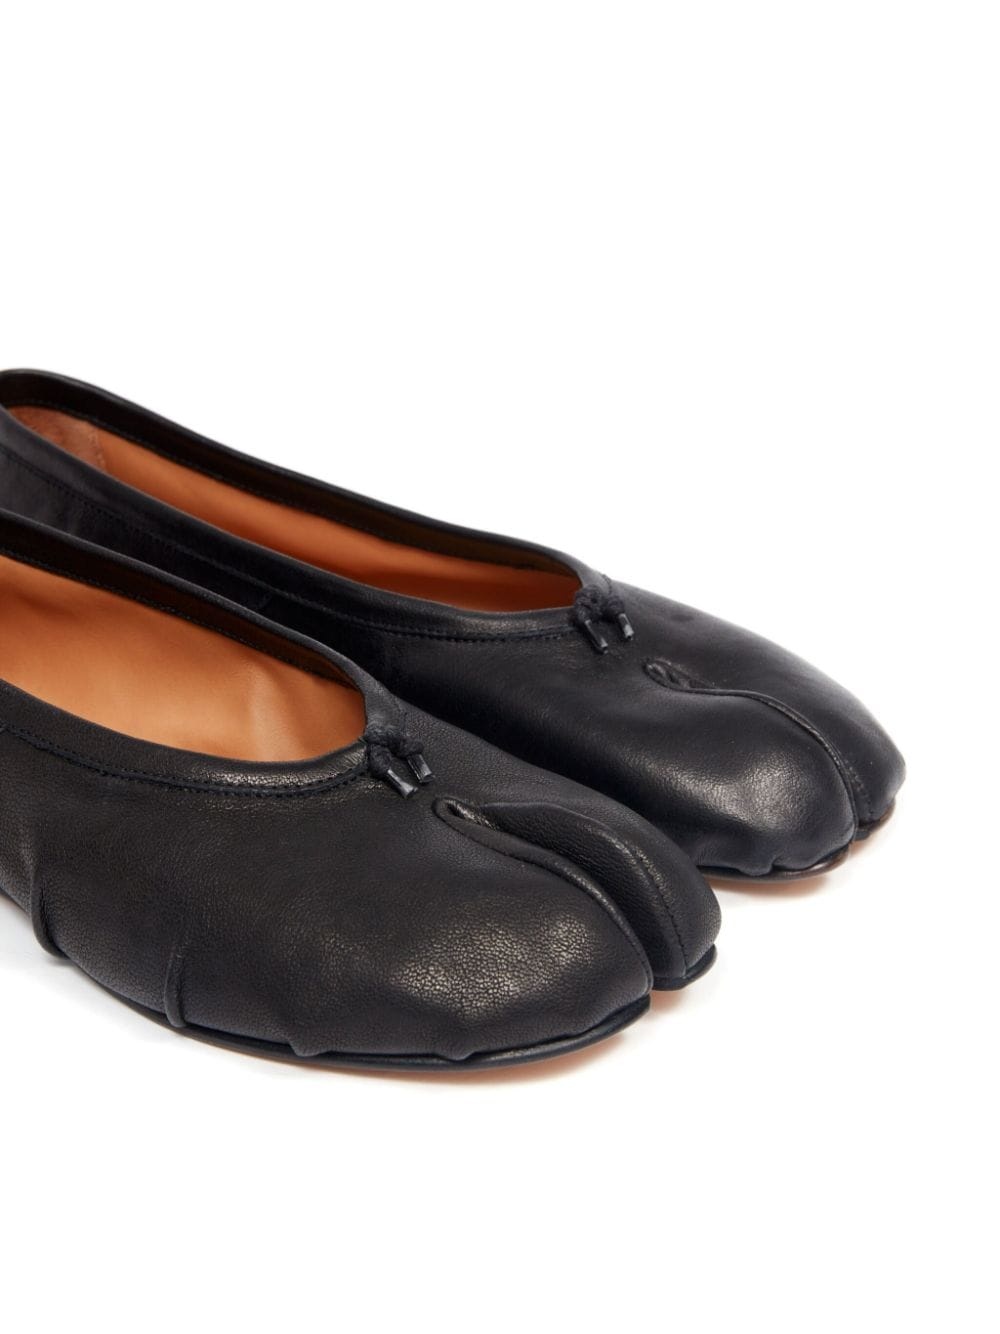 Tabi ballerina shoes - 5